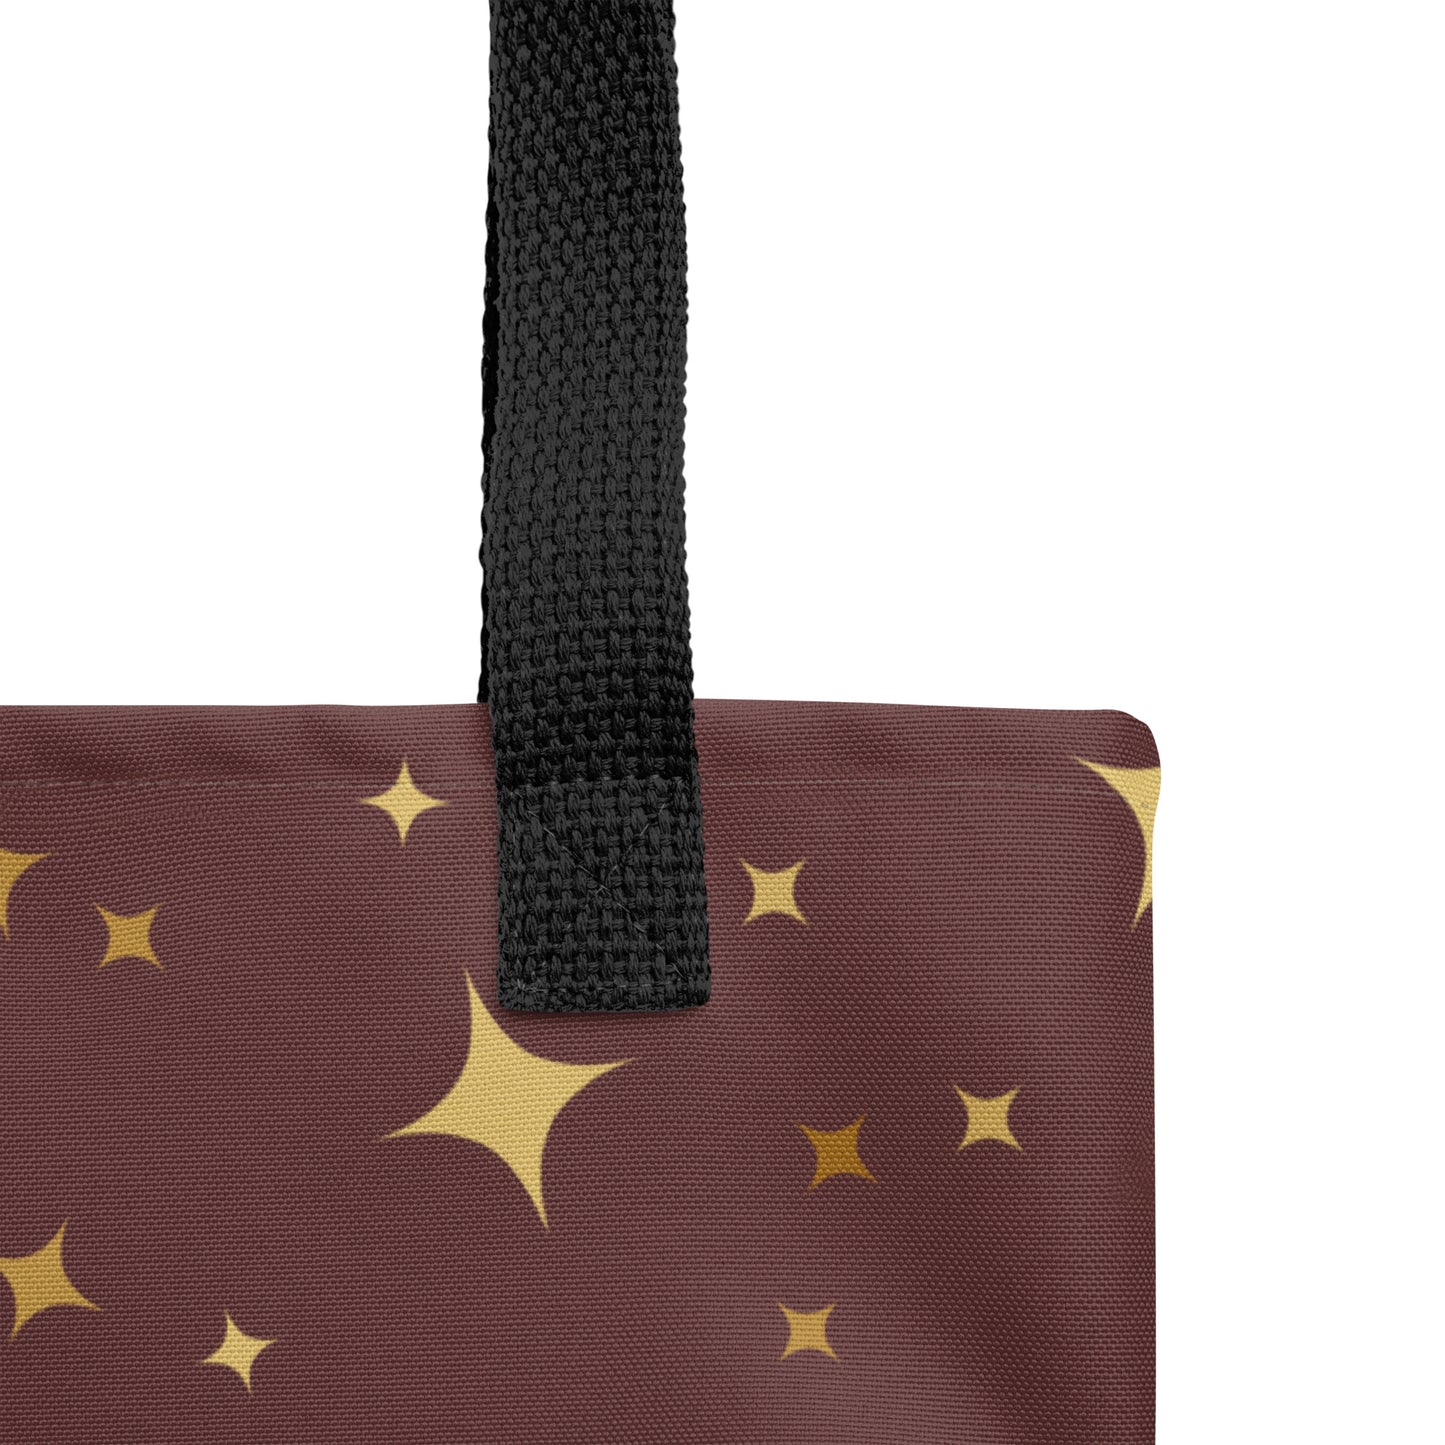 Burgundy Gold Star Tote Bag